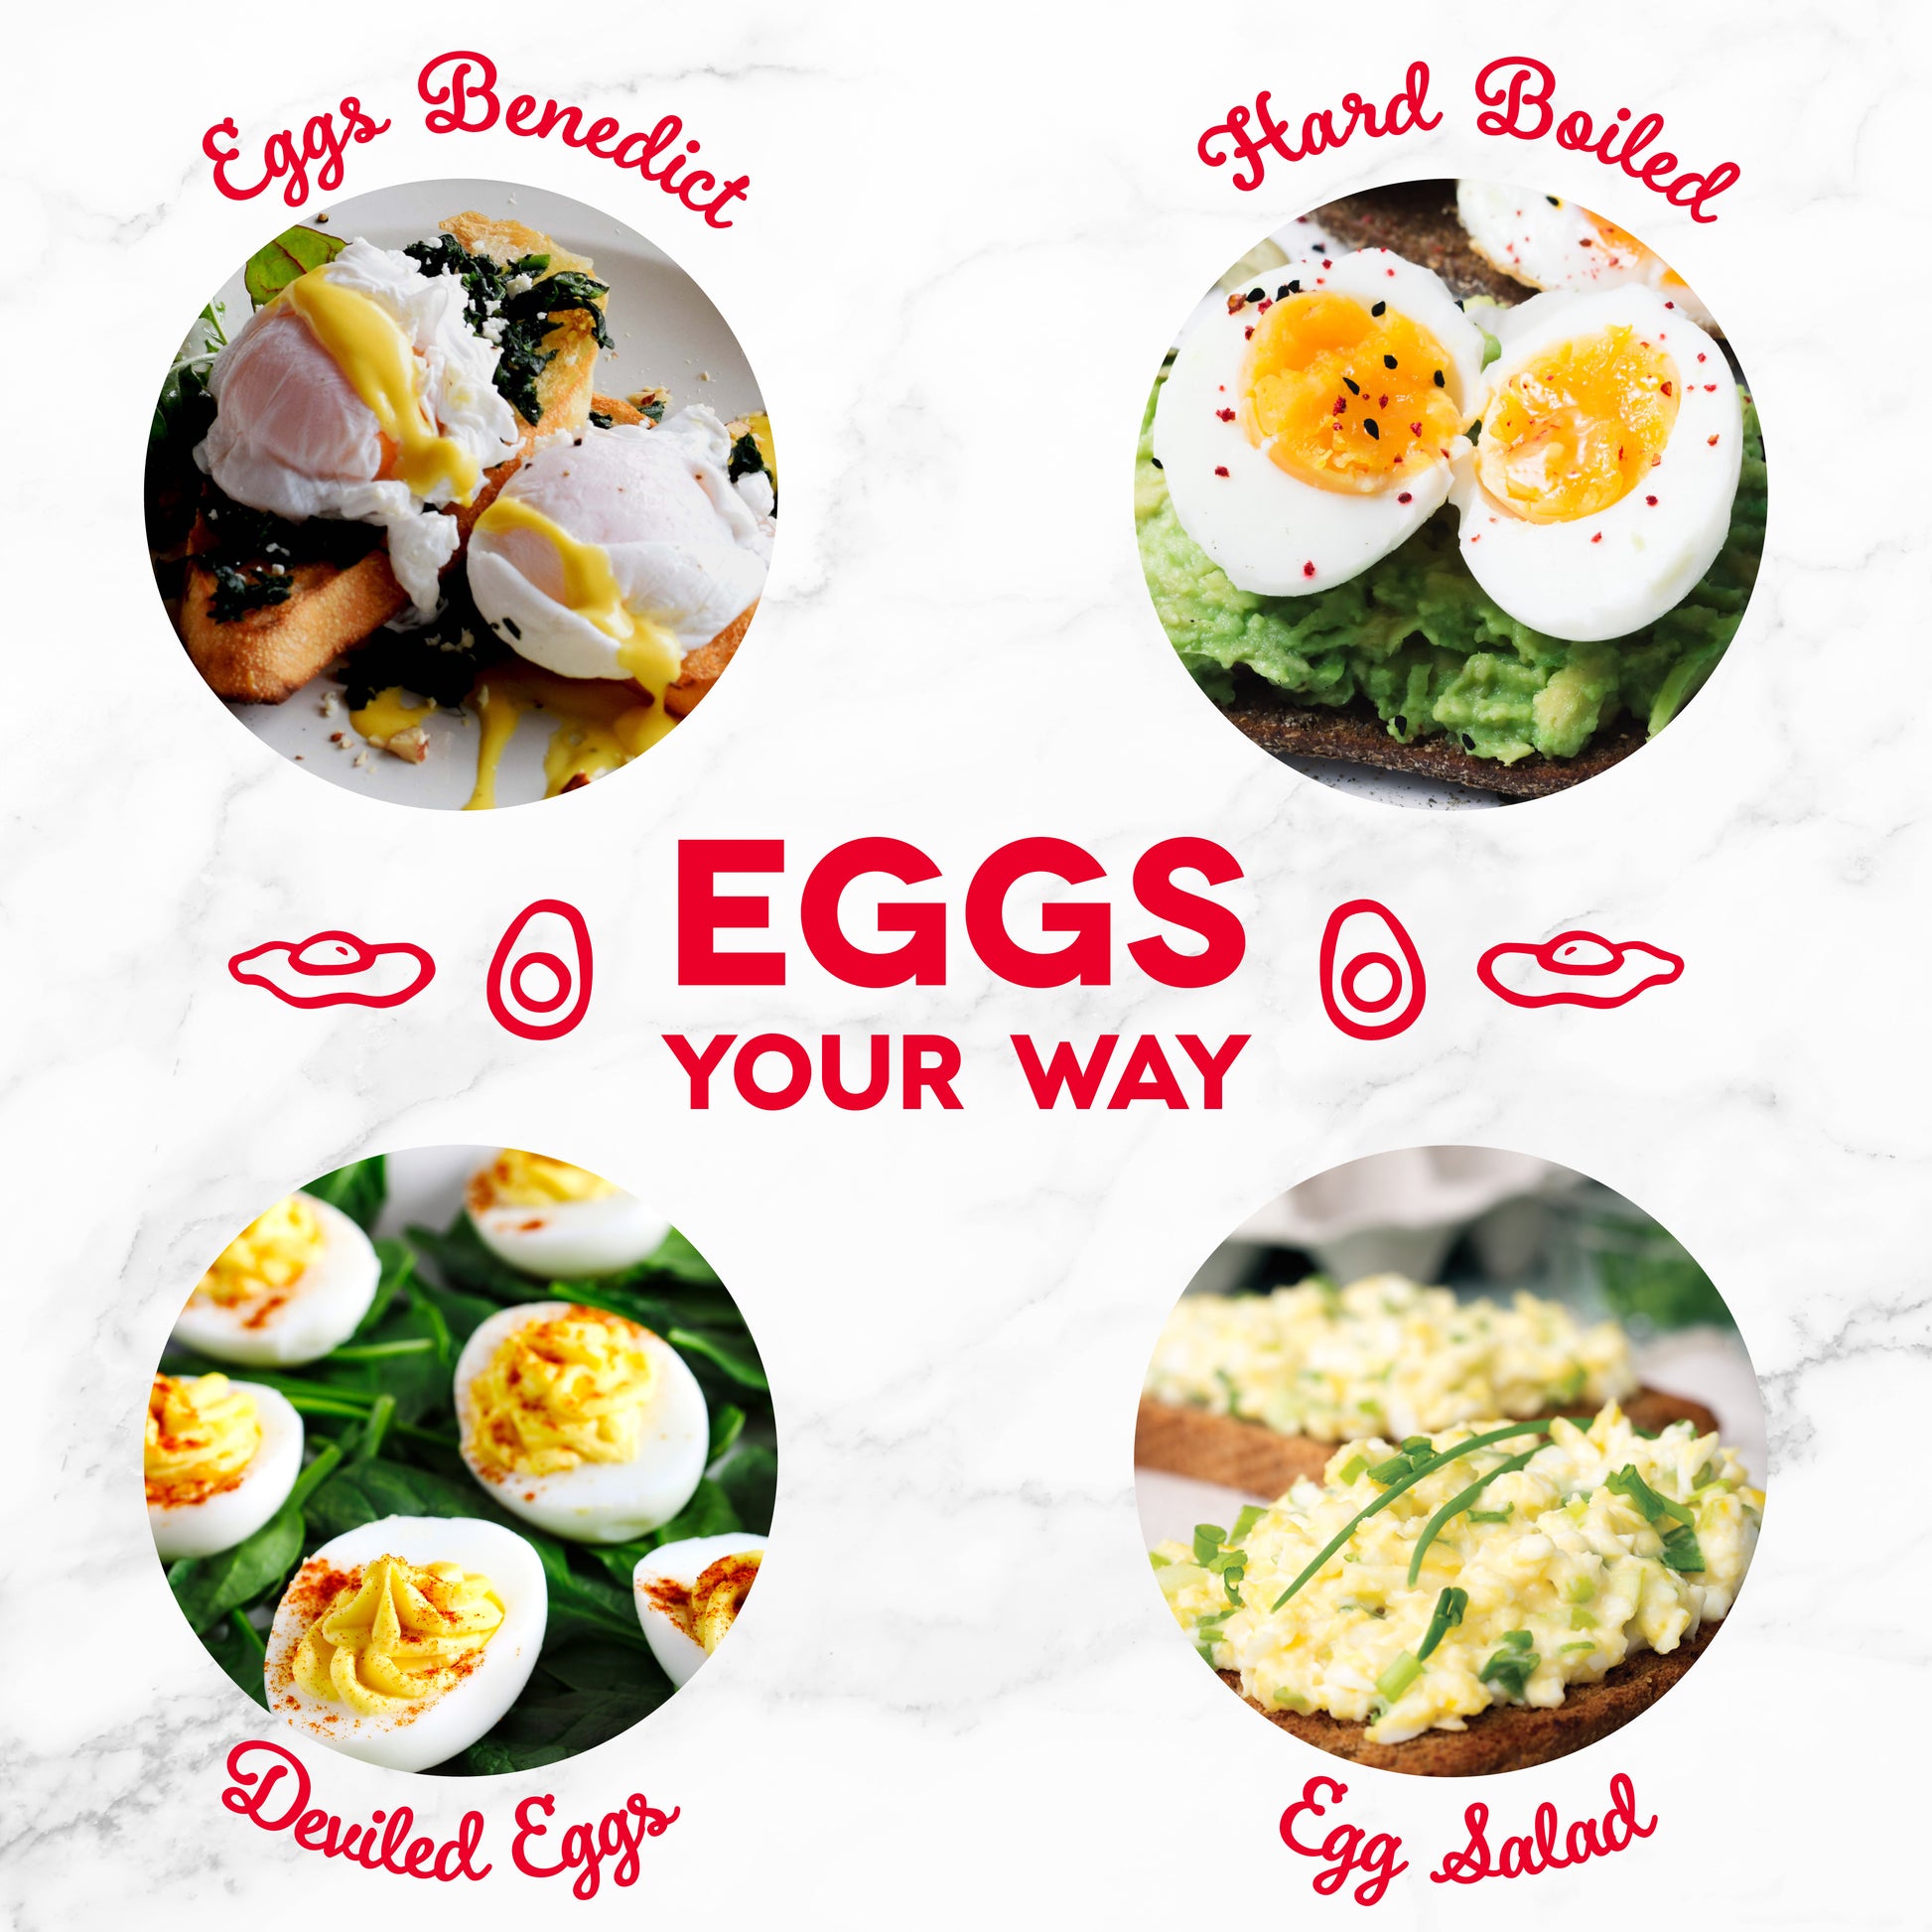 Electric Rapid 12 Eggs Cooker W/ Auto Shut Off – Joanna Home